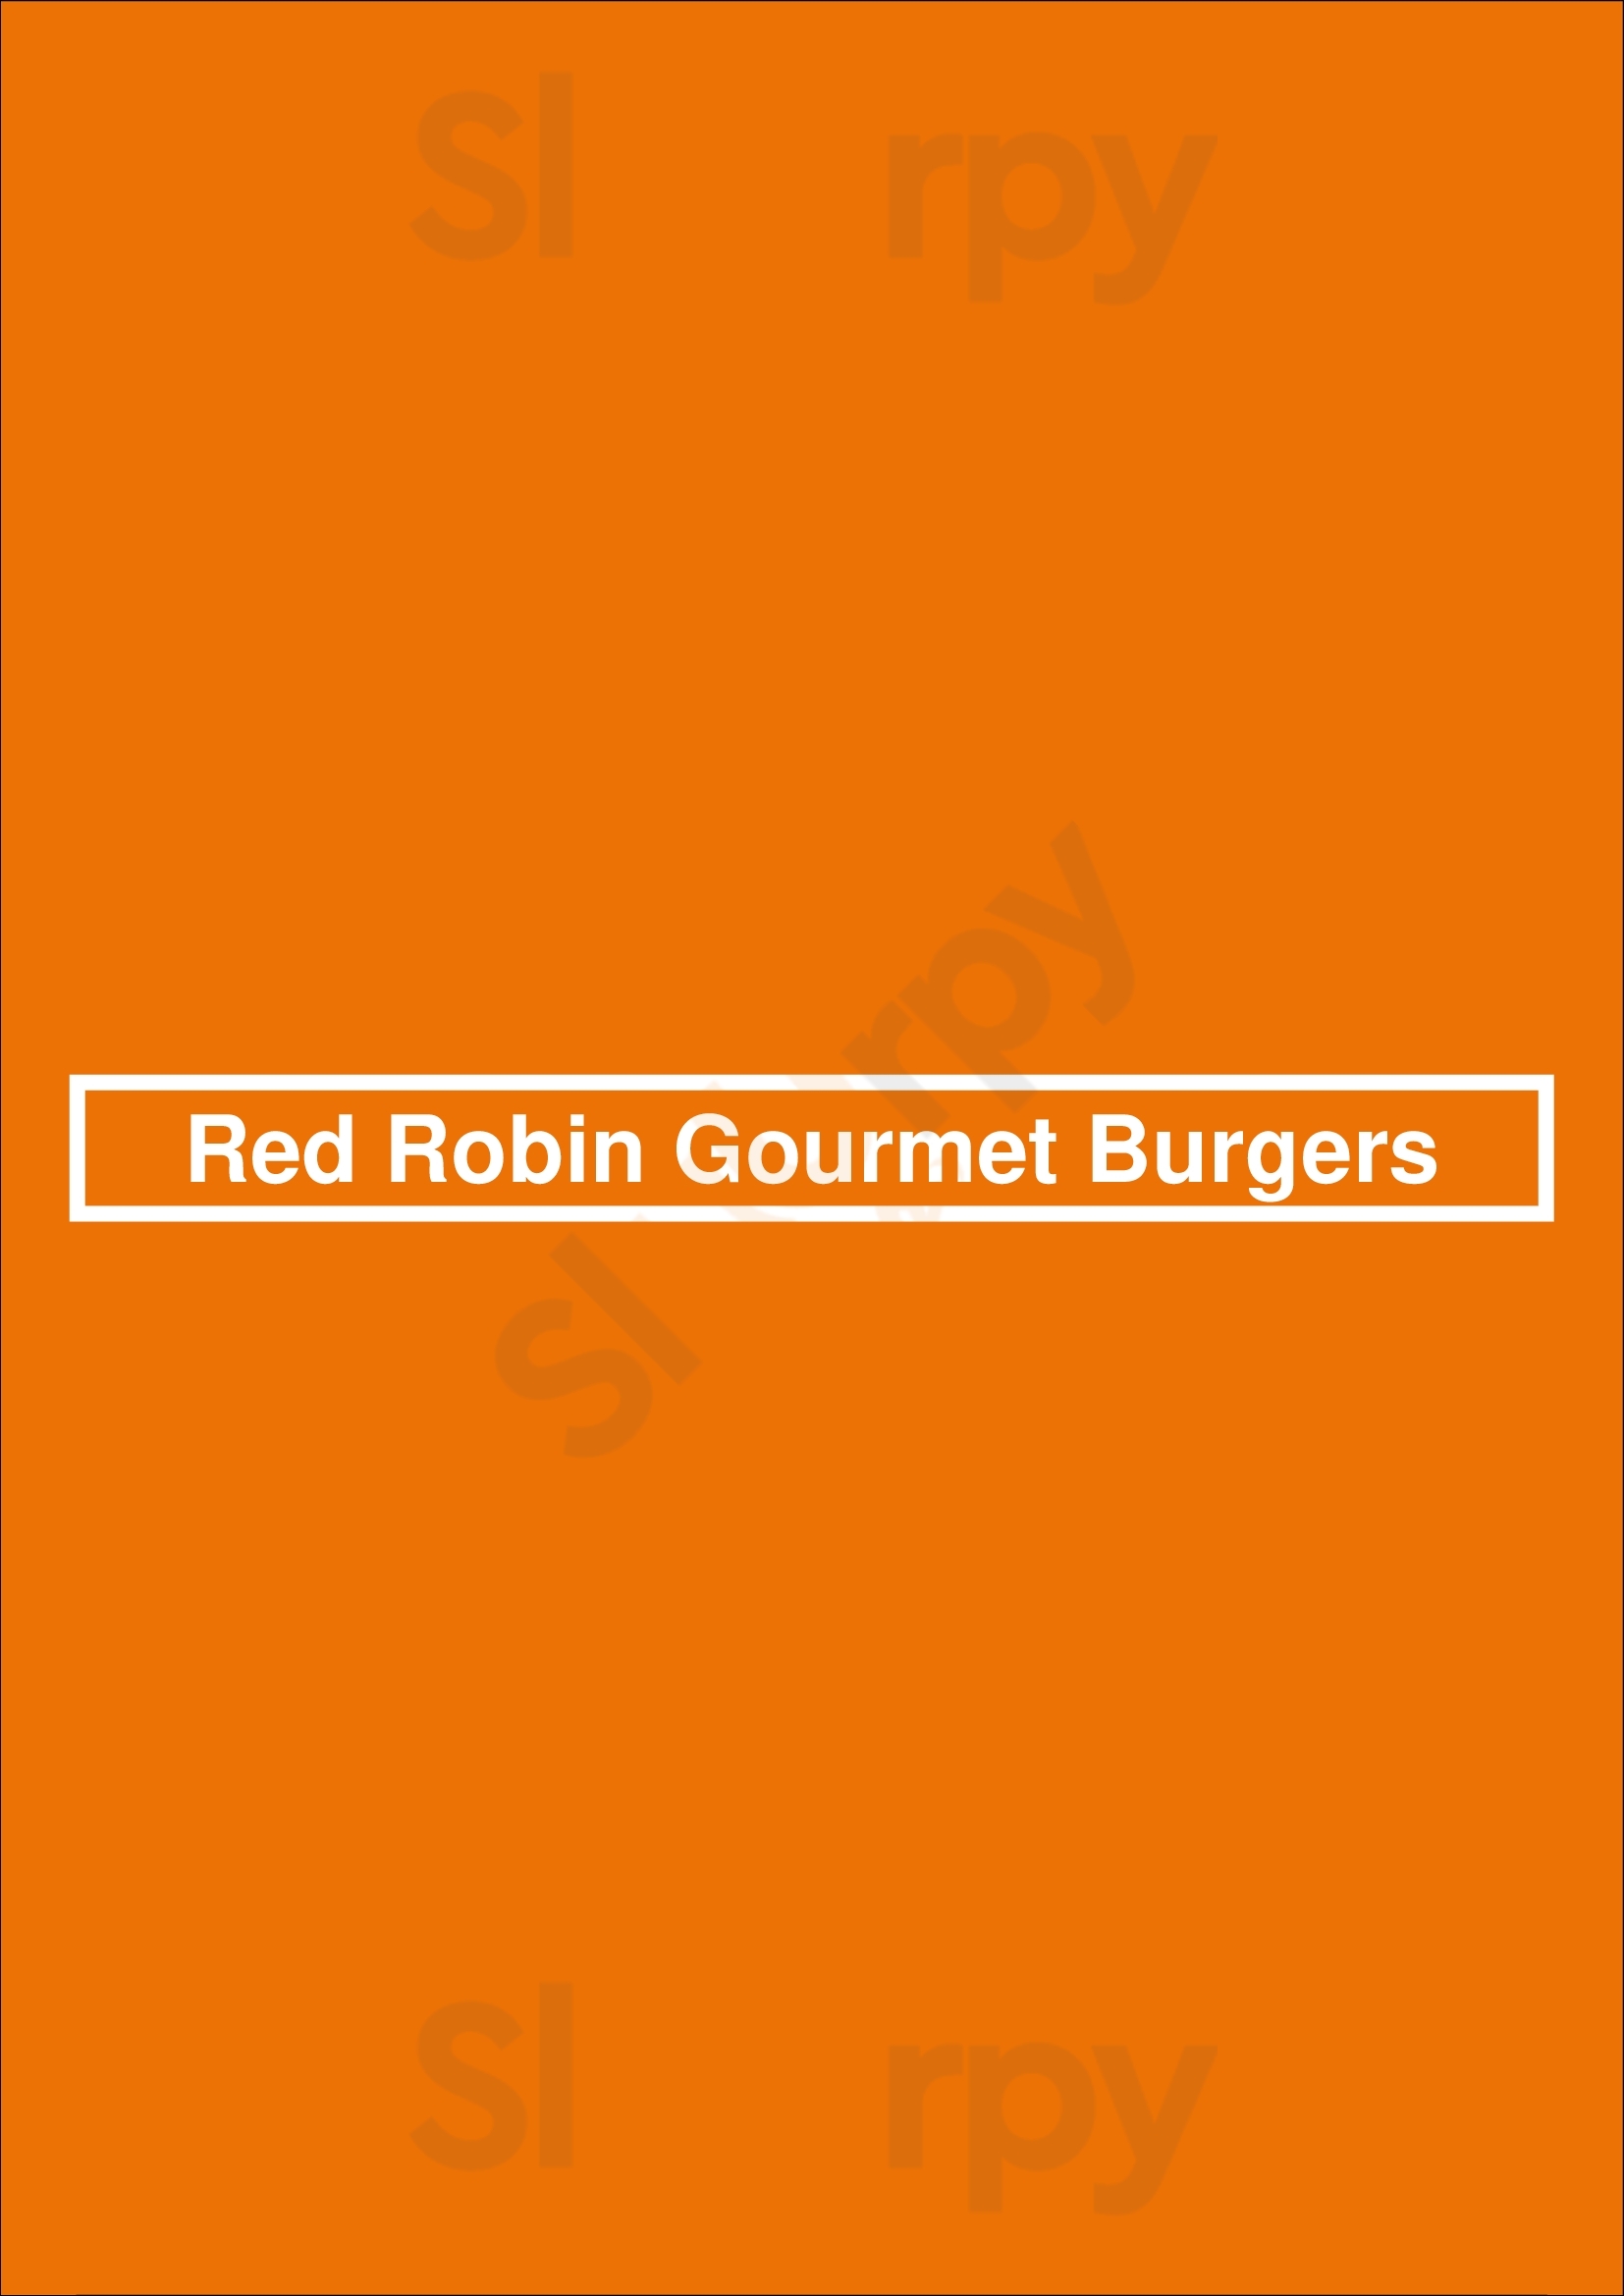 Red Robin Gourmet Burgers Rancho Mirage Menu - 1